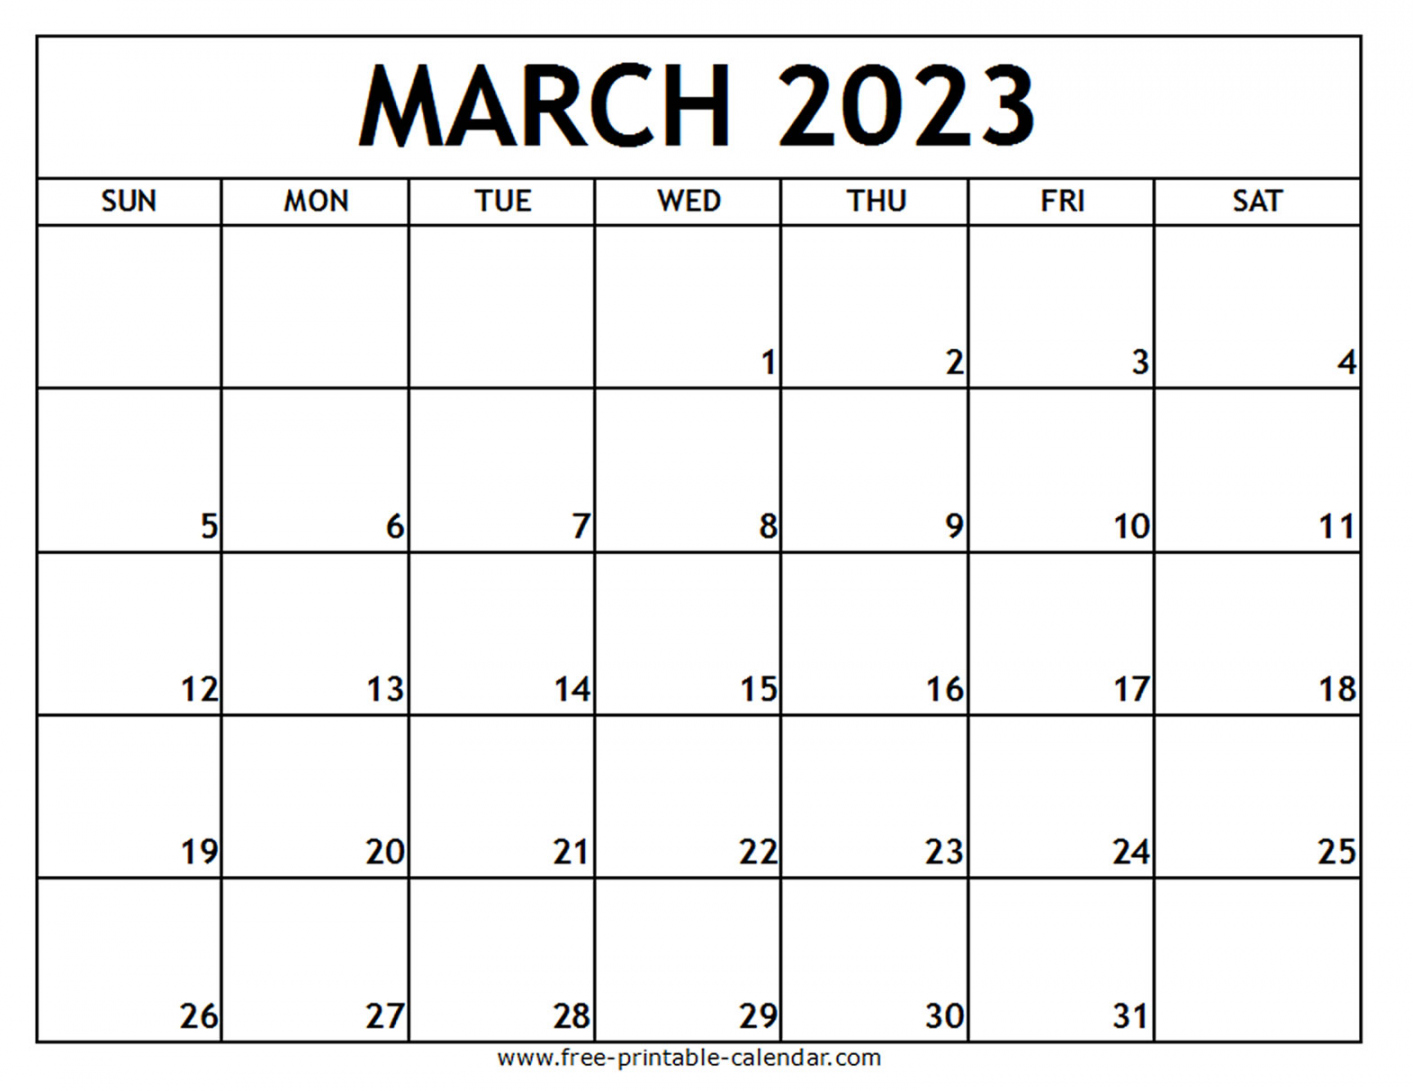 March 2023 Calendar Free Printable - Printable - March  Printable Calendar - Free-printable-calendar